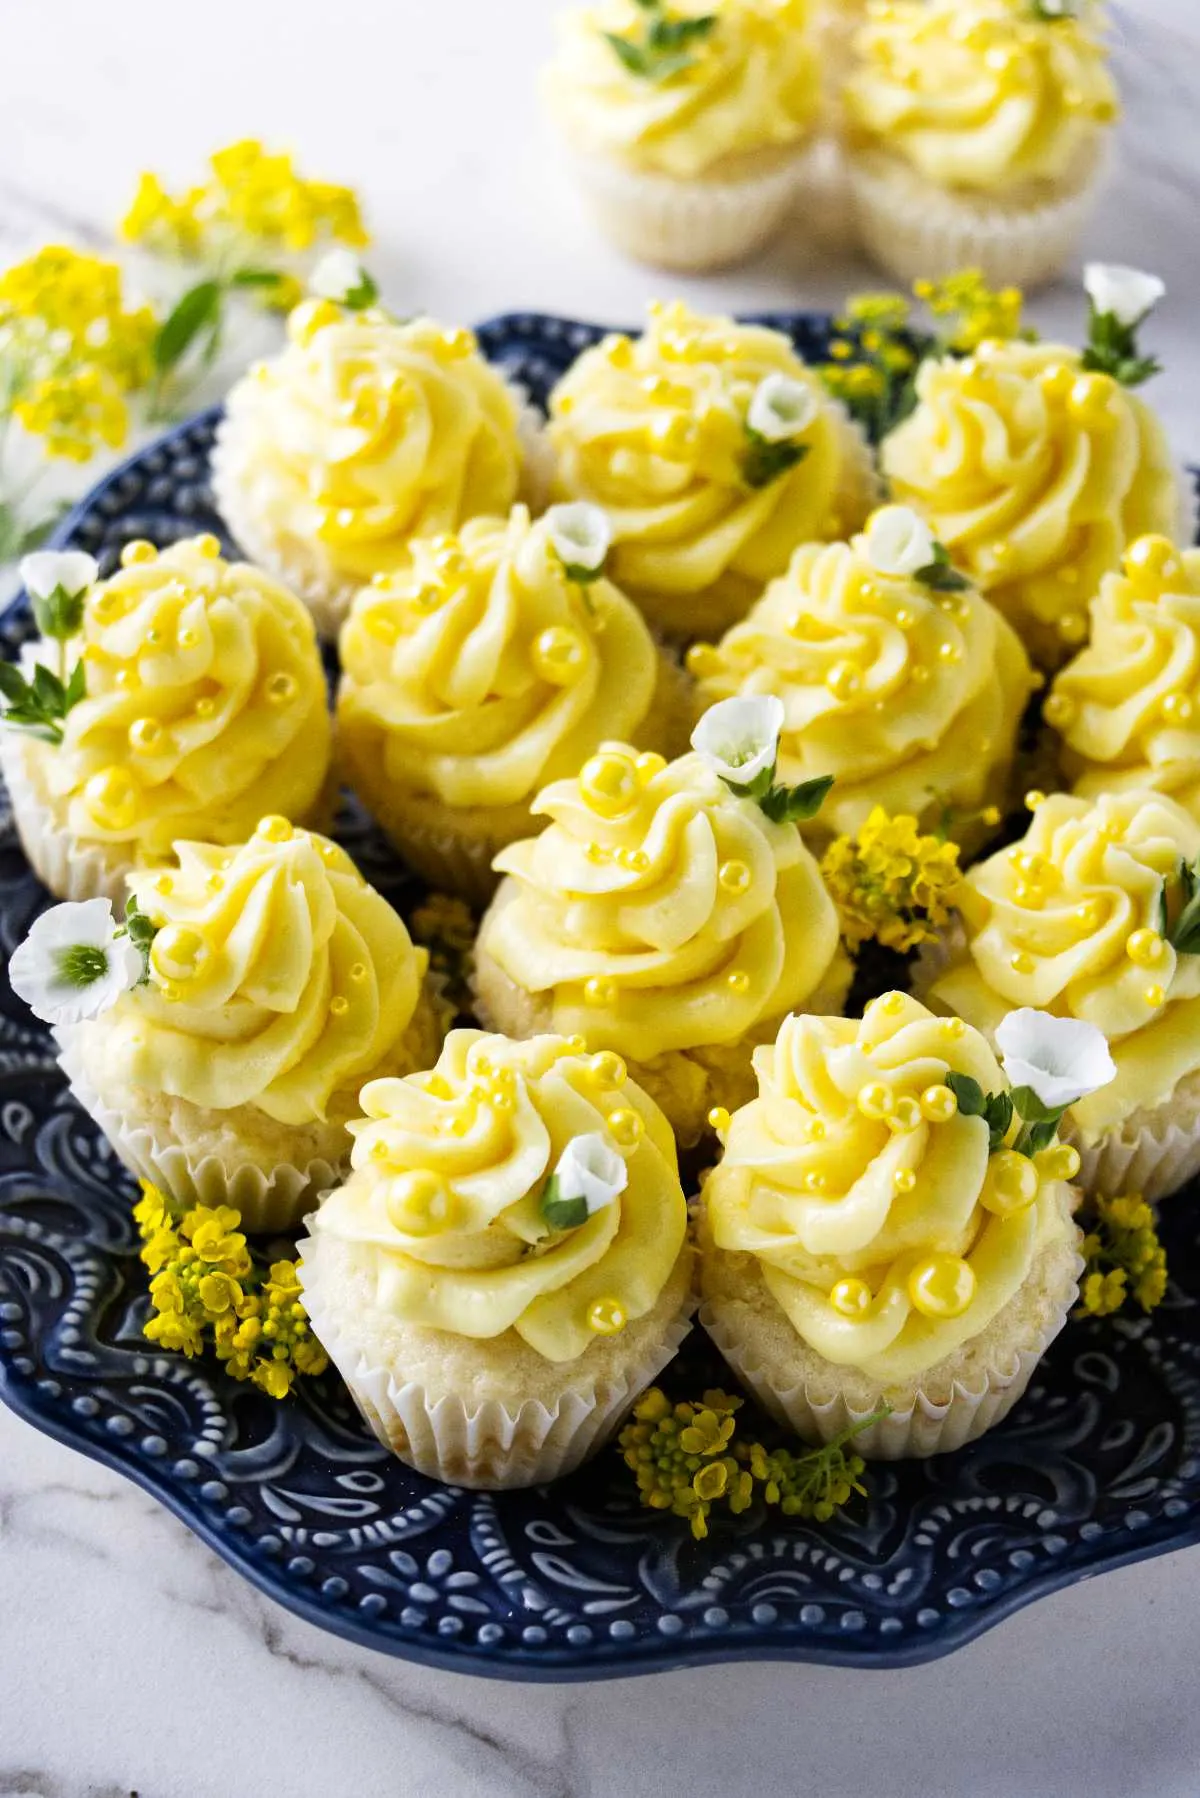 Several miniature lemon cupcakes on a blue plate.